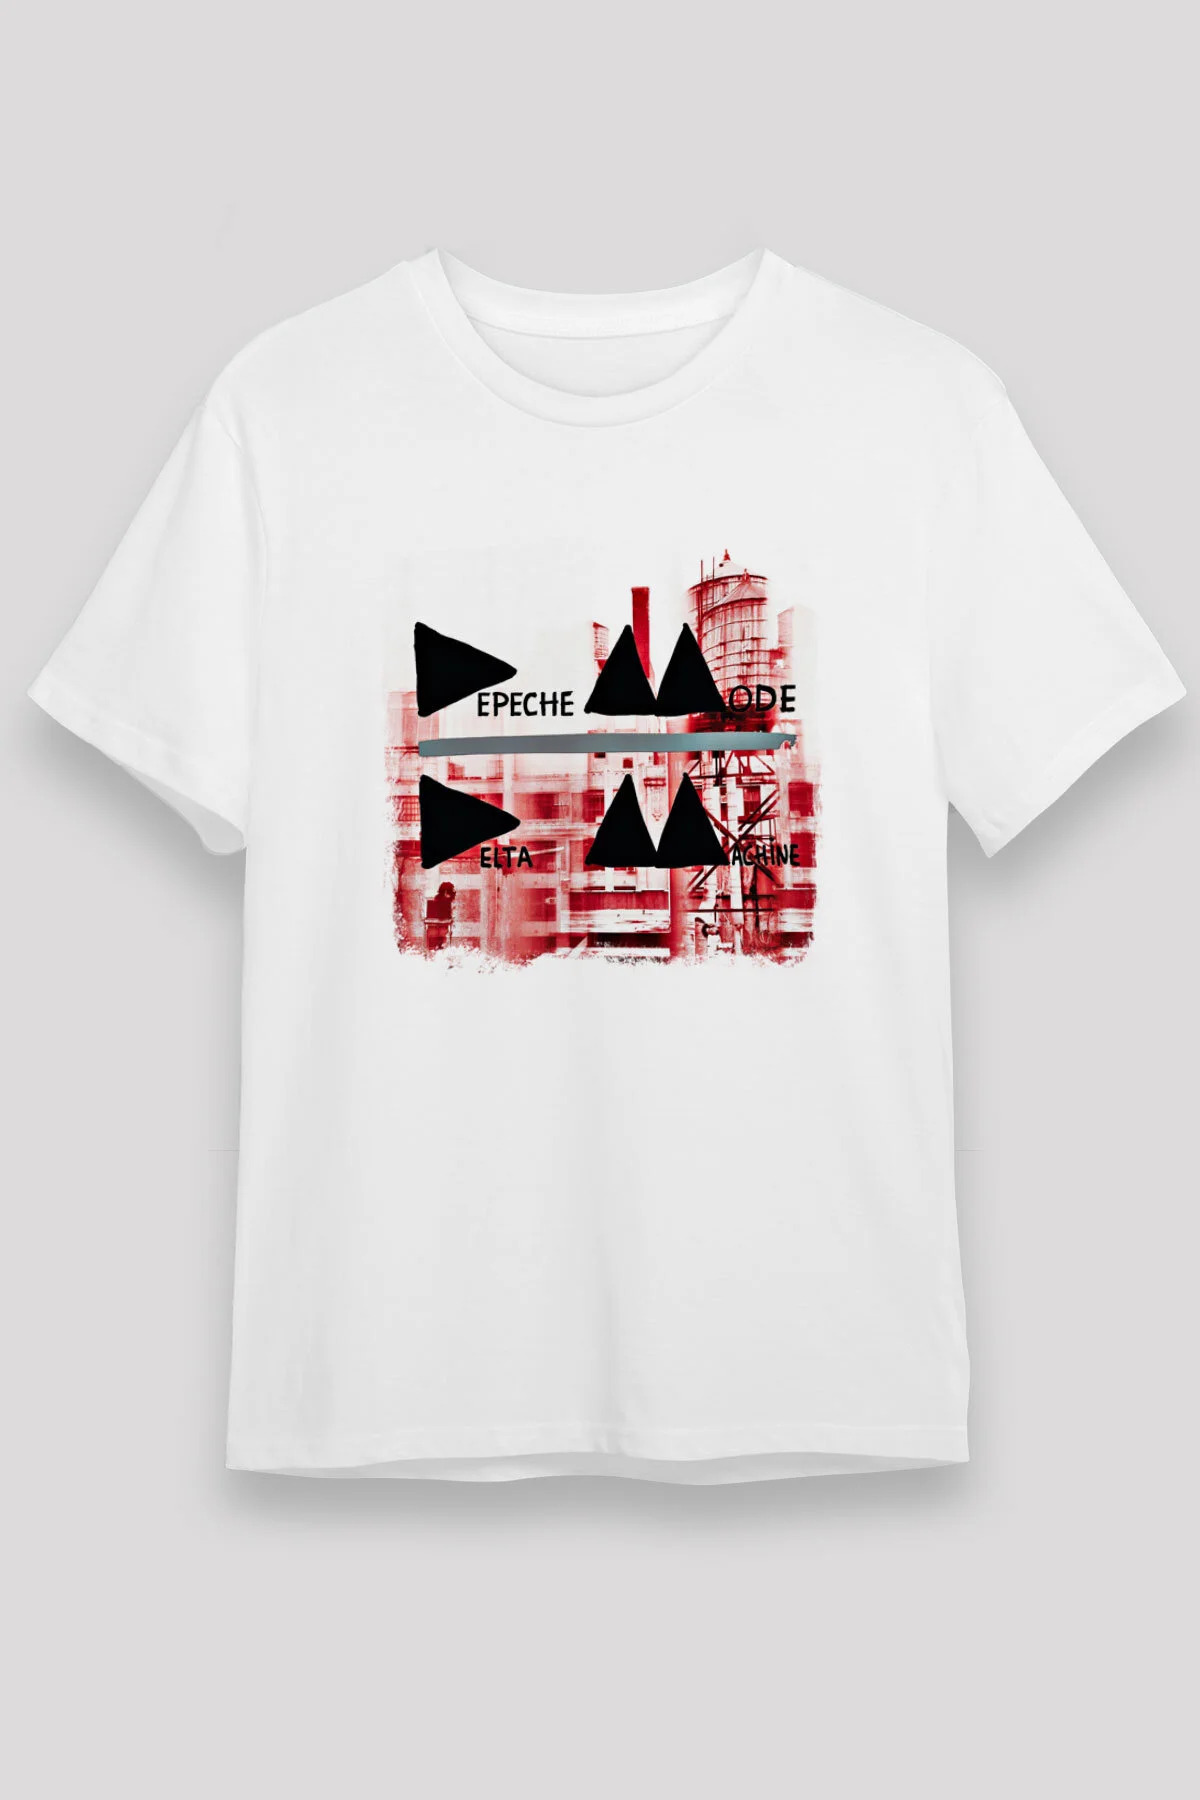 Depeche Mode T shirt , Music Band ,Unisex Tshirt 16